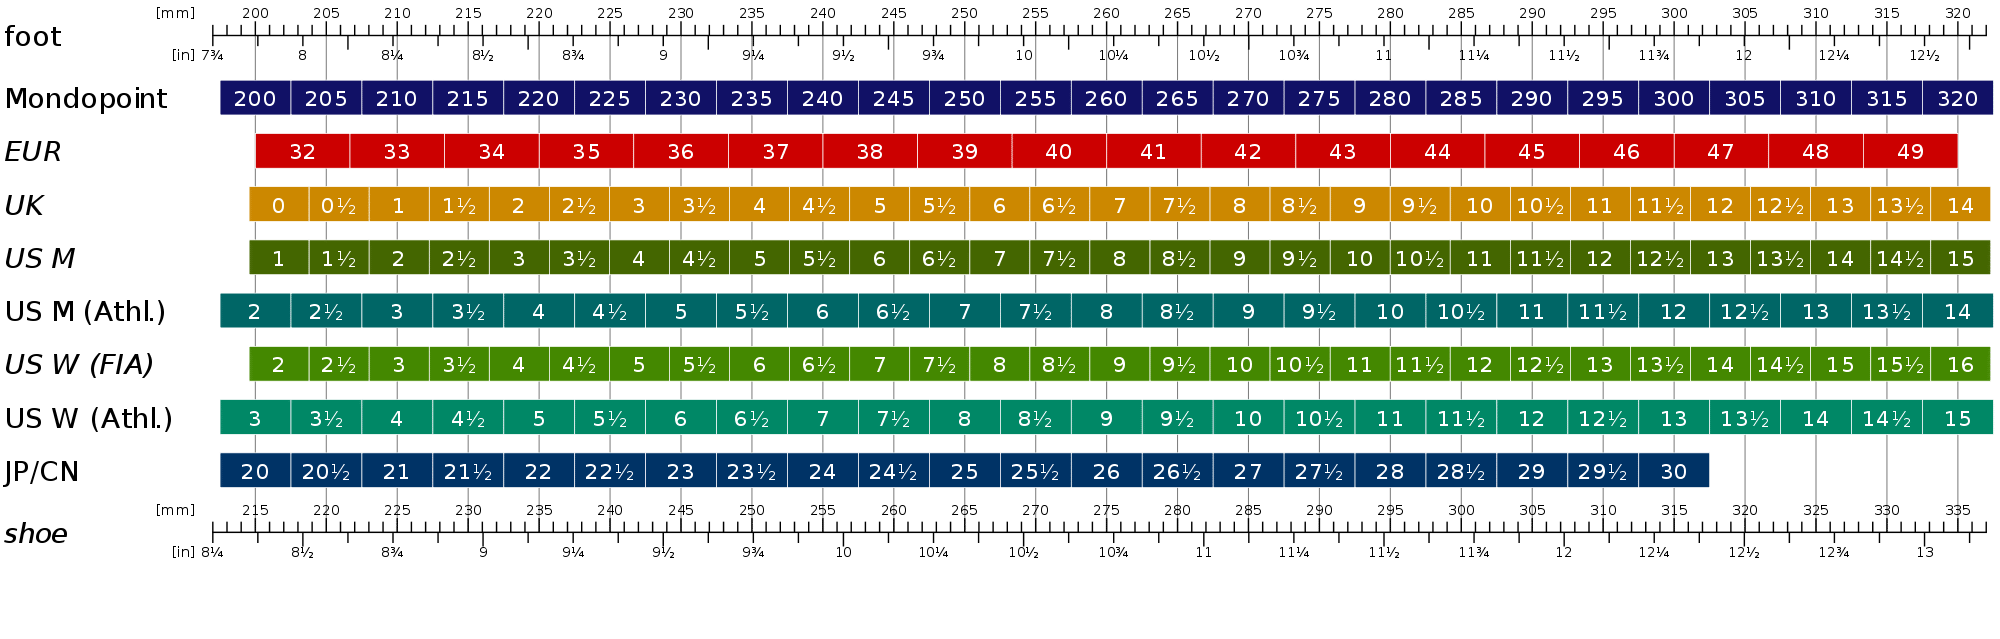 Mens-shoe-size-chart.png